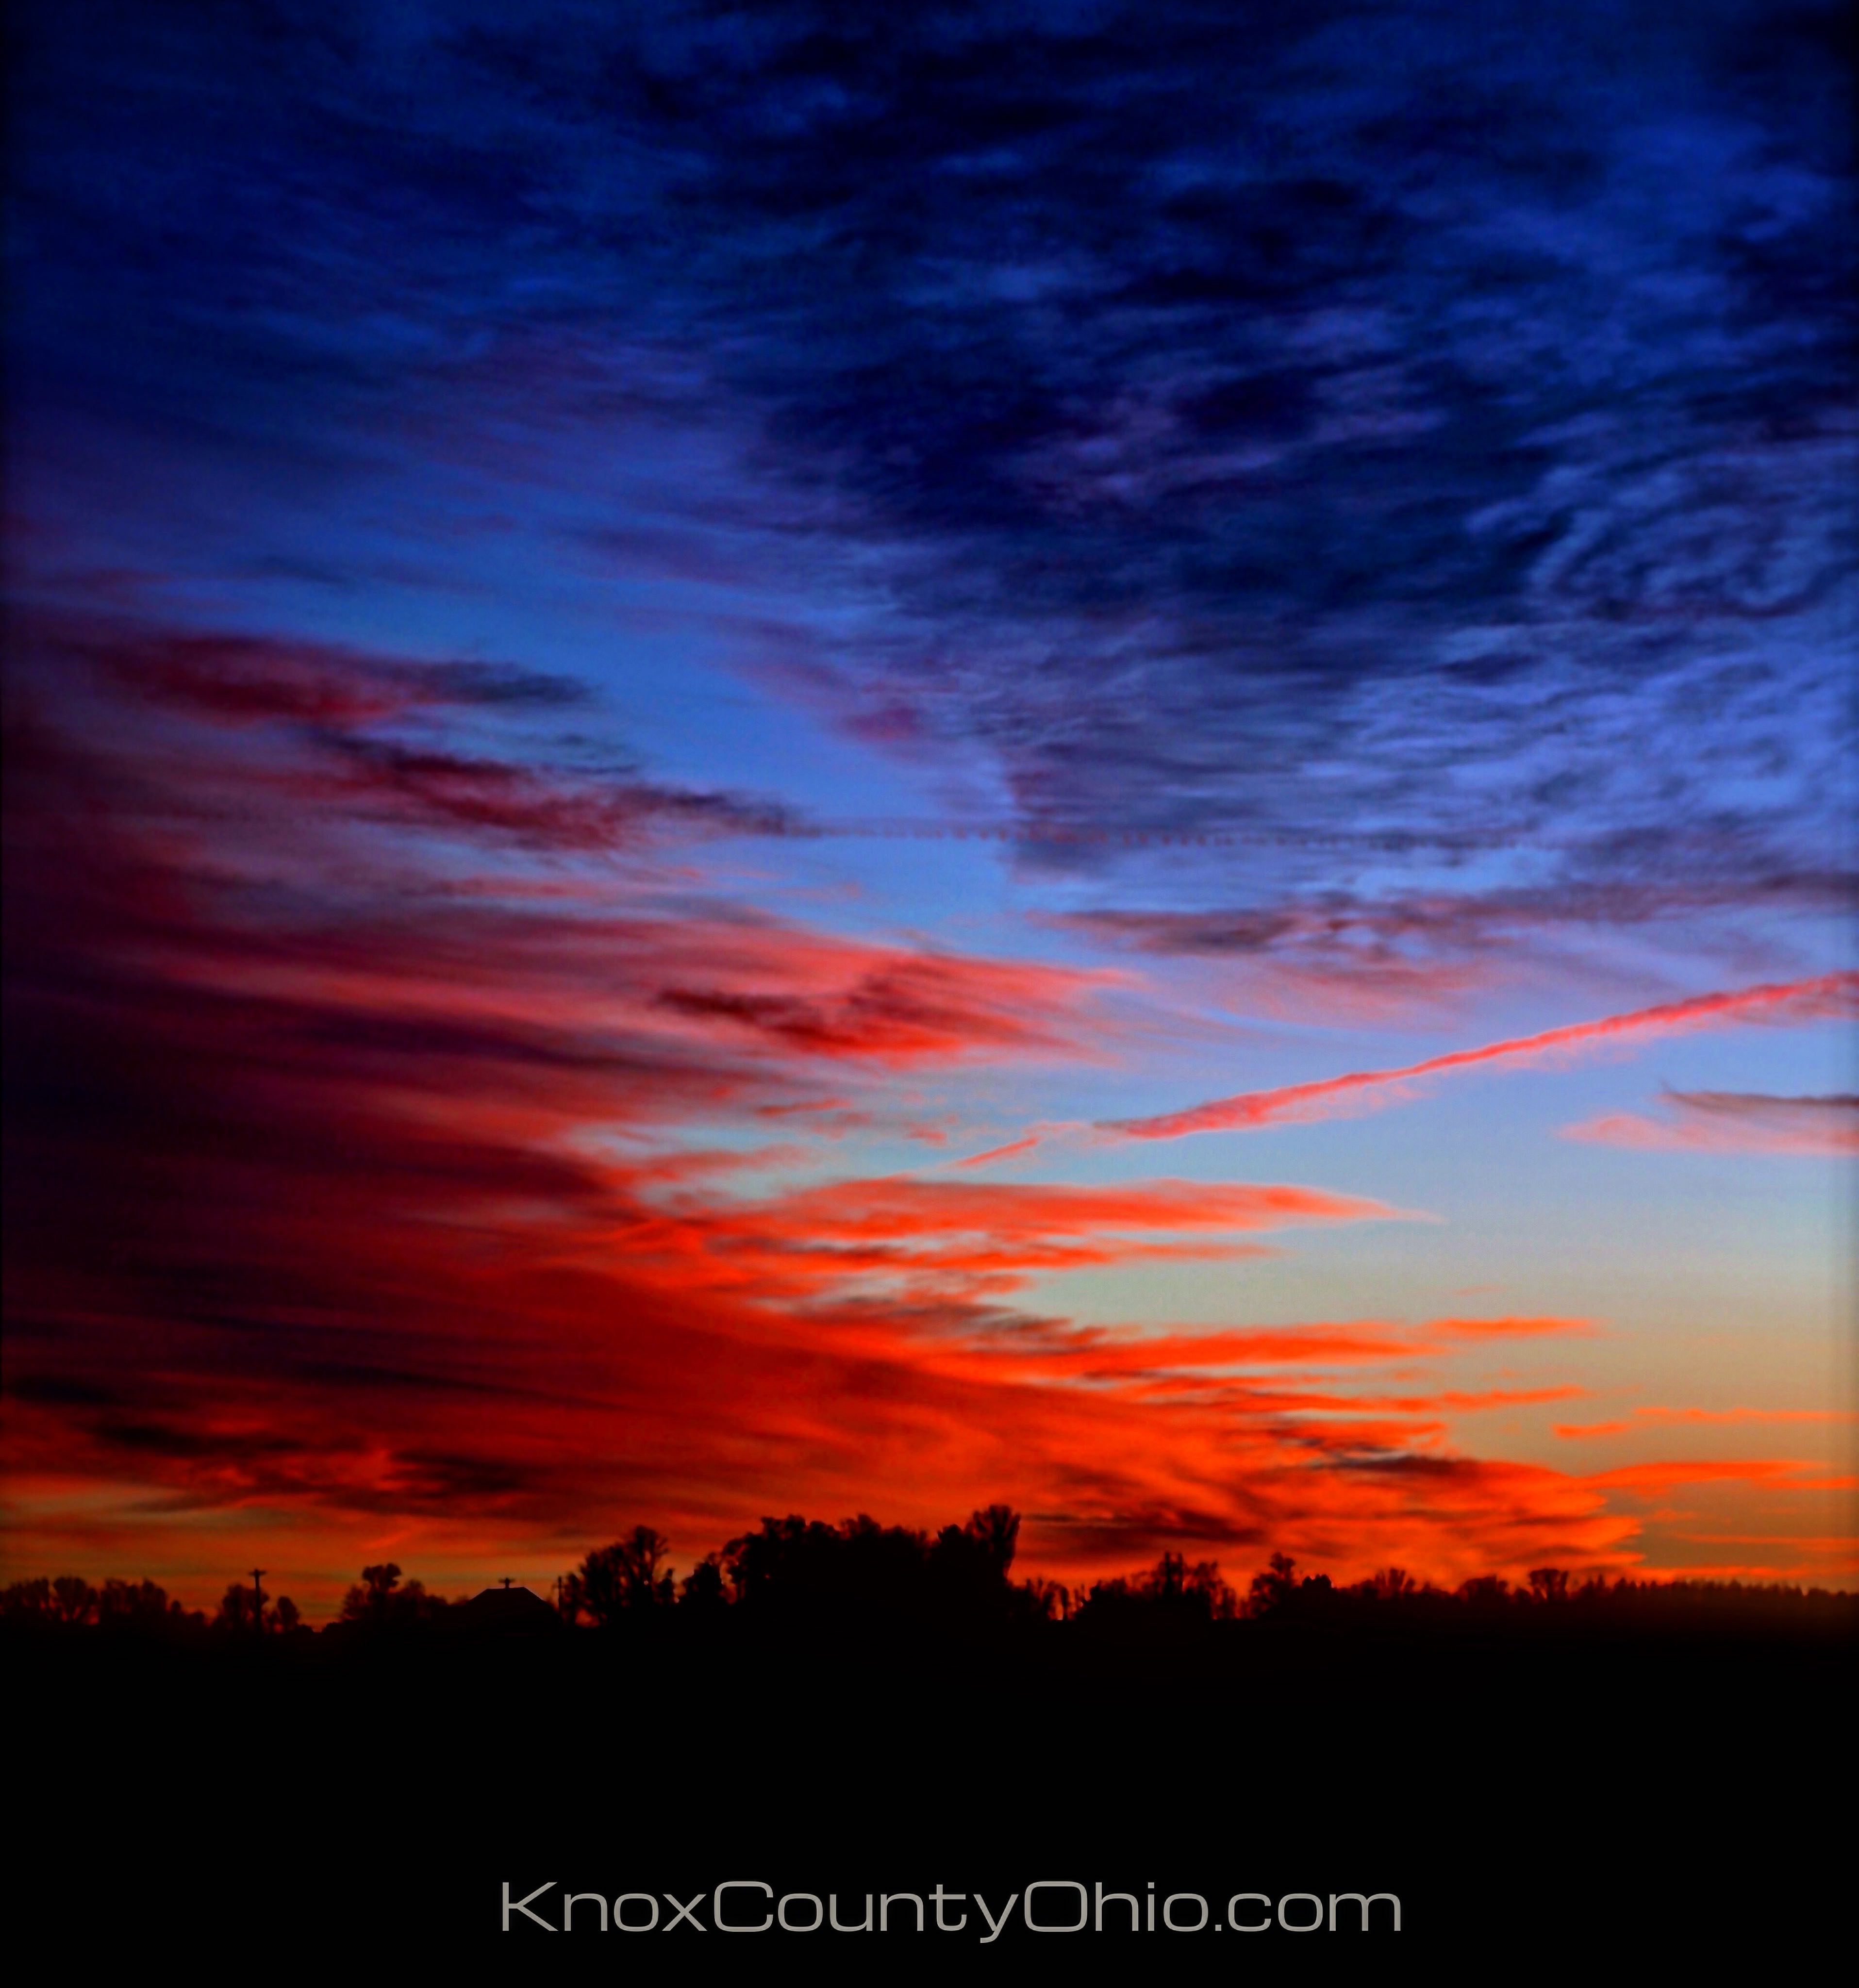 Mount Vernon Ohio Sunset Photo taken by Knox County Ohio REALTOR Sam Miller on December 6th, 2015